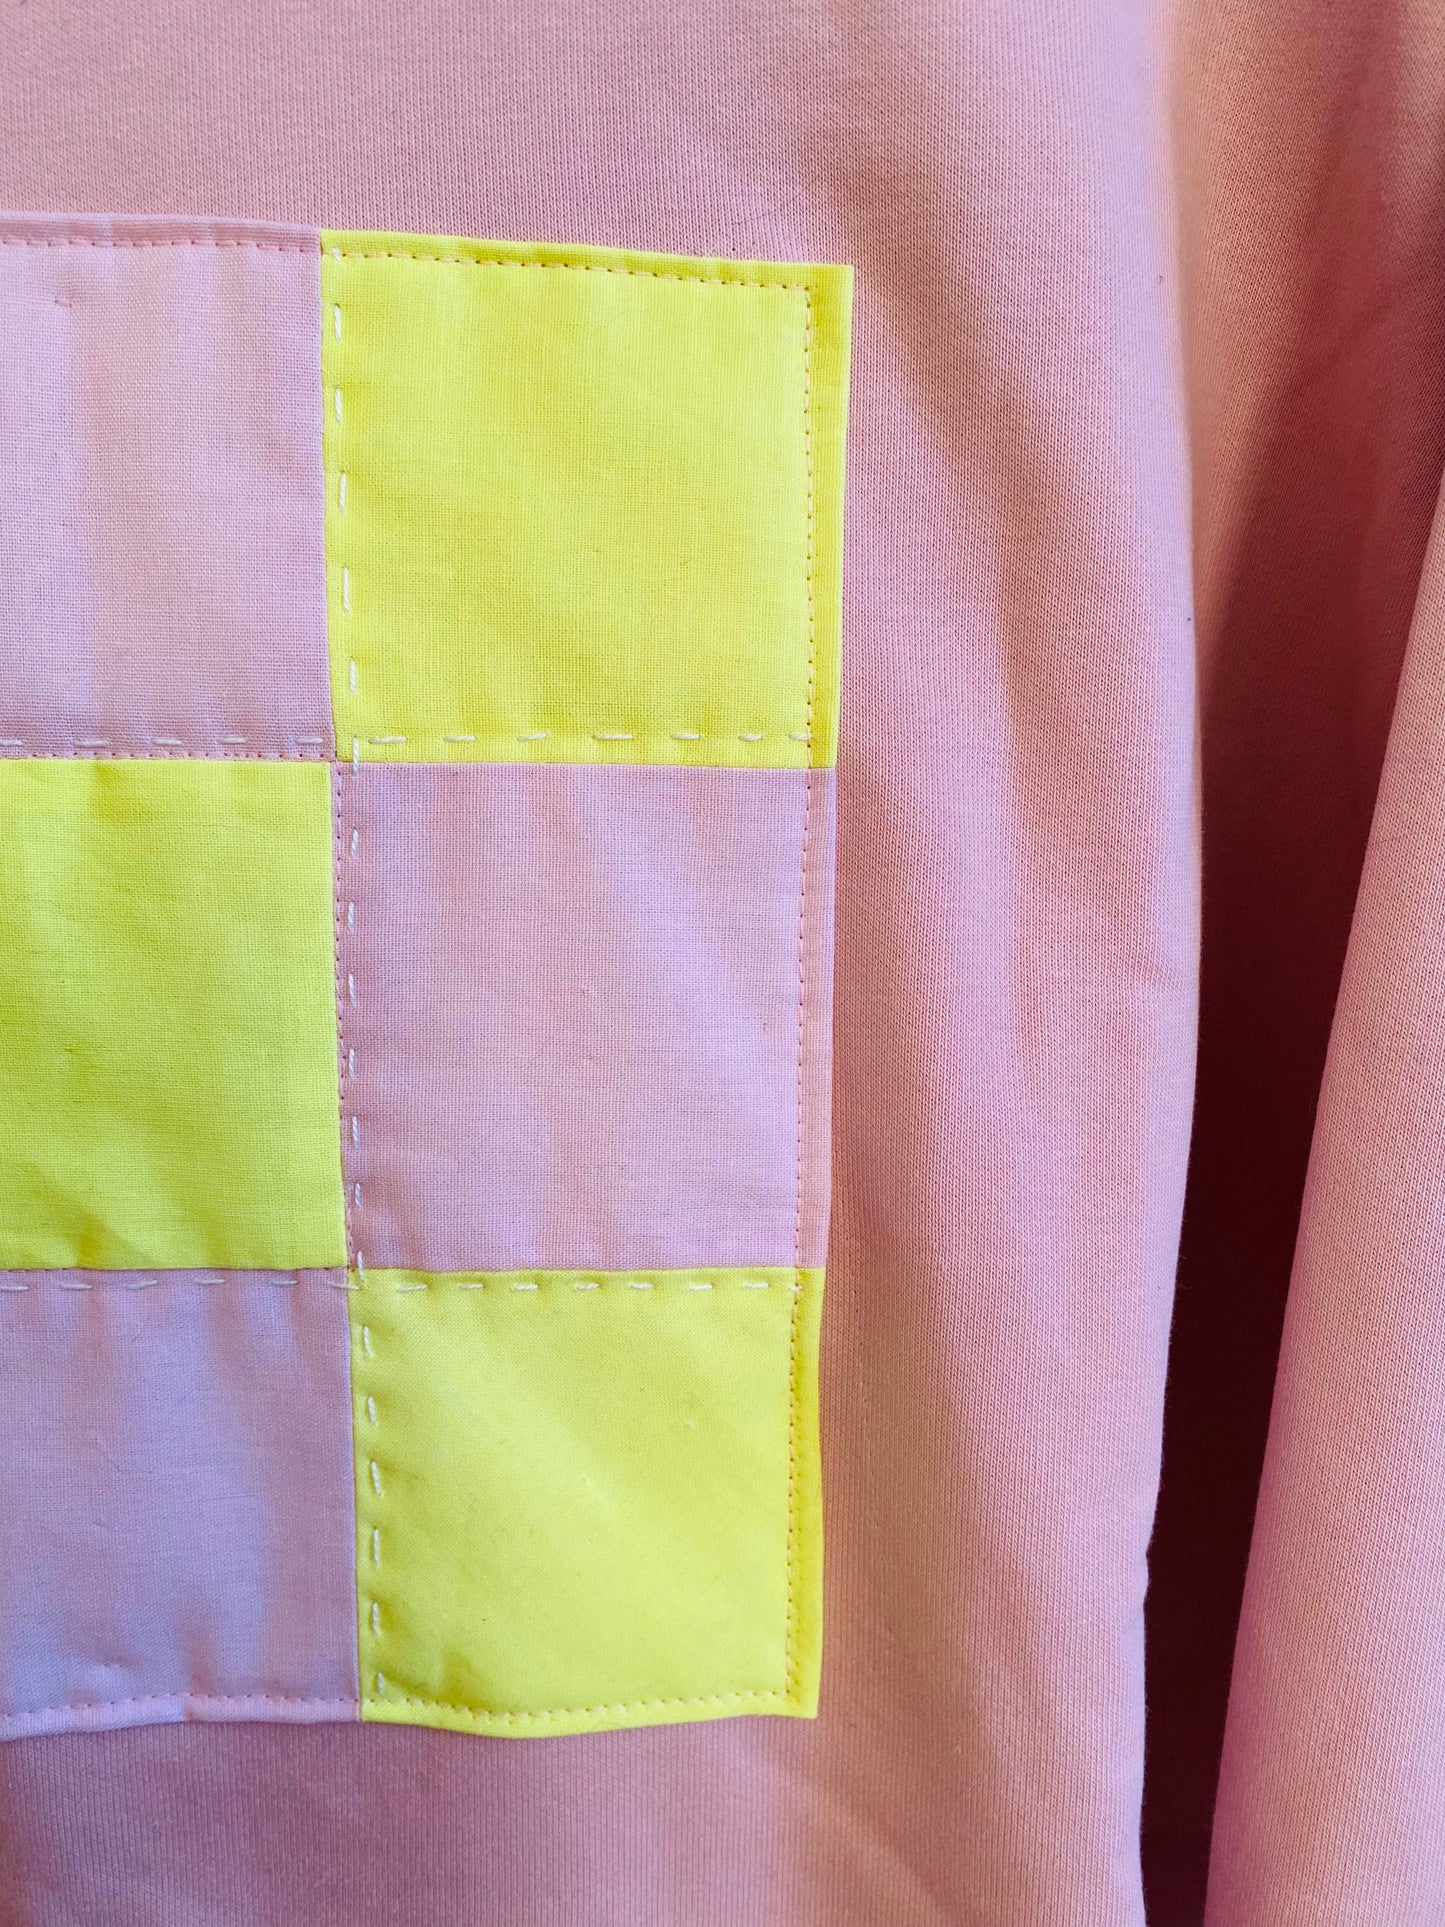 Pink & Neon Yellow Check / Hoodie